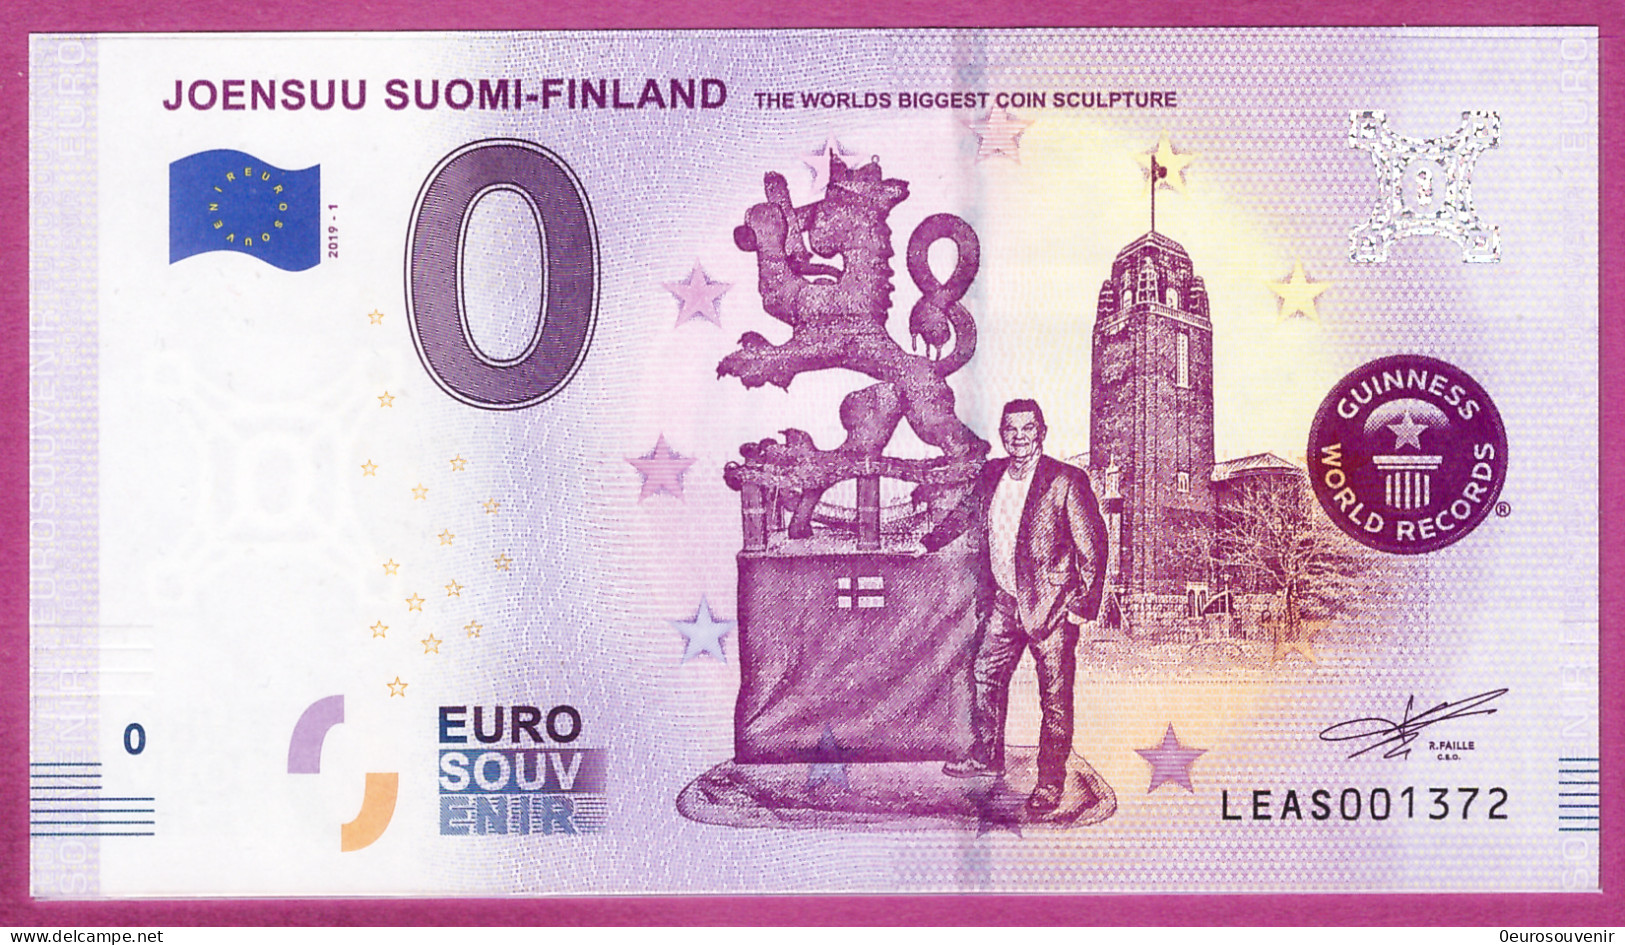 0-Euro LEAS 2019-1 JOENSUU SUOMEN-FINLAND - THE WORLDS BIGGEST COIN SCULPTURE - GUINNESS WORLD RECORDS - Pruebas Privadas